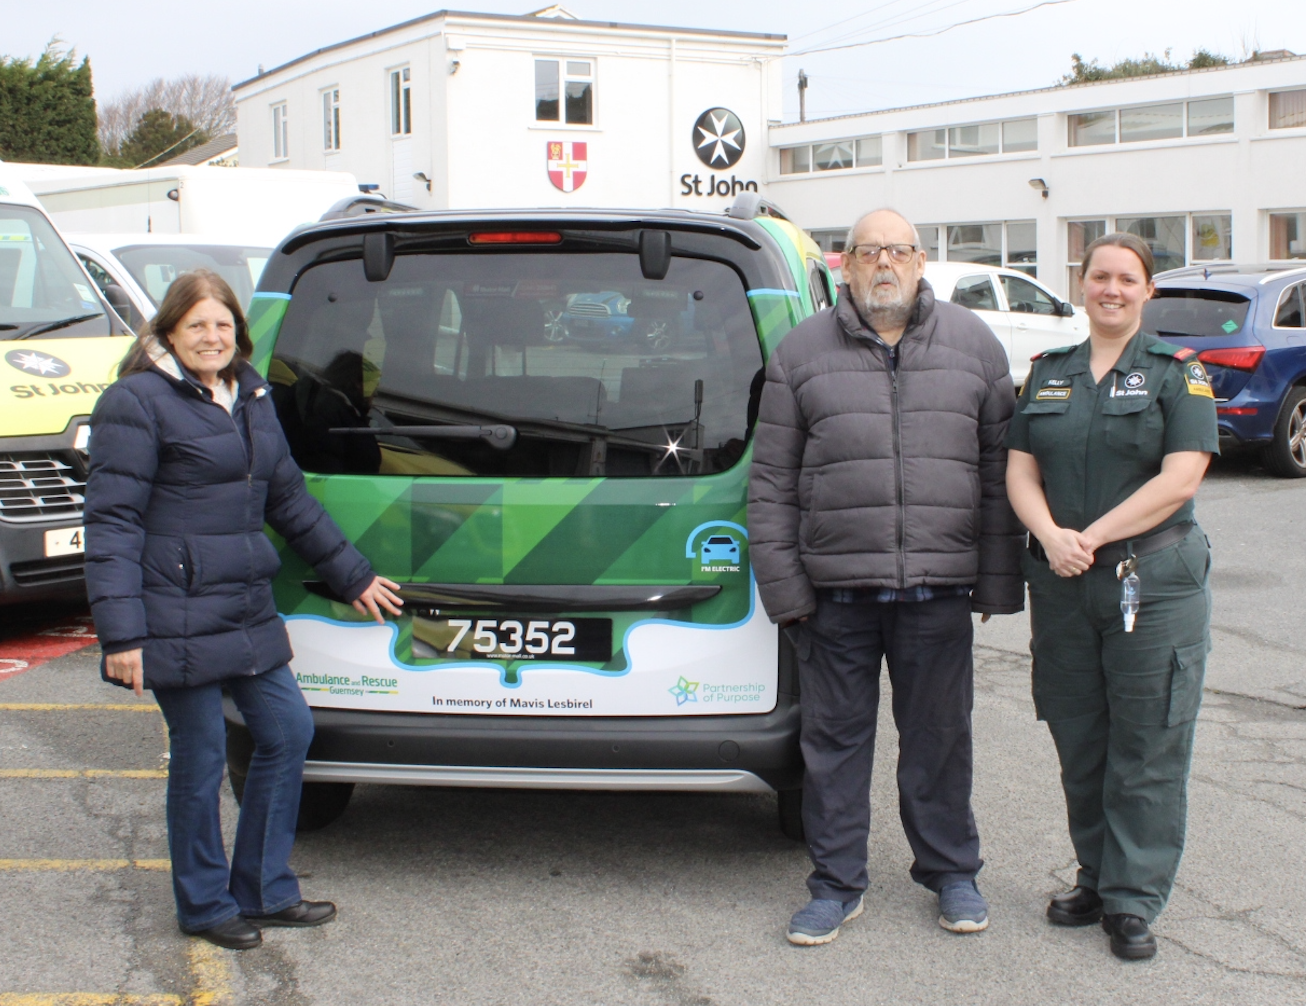 mavis lesbirel ambulance preventative care vehicle